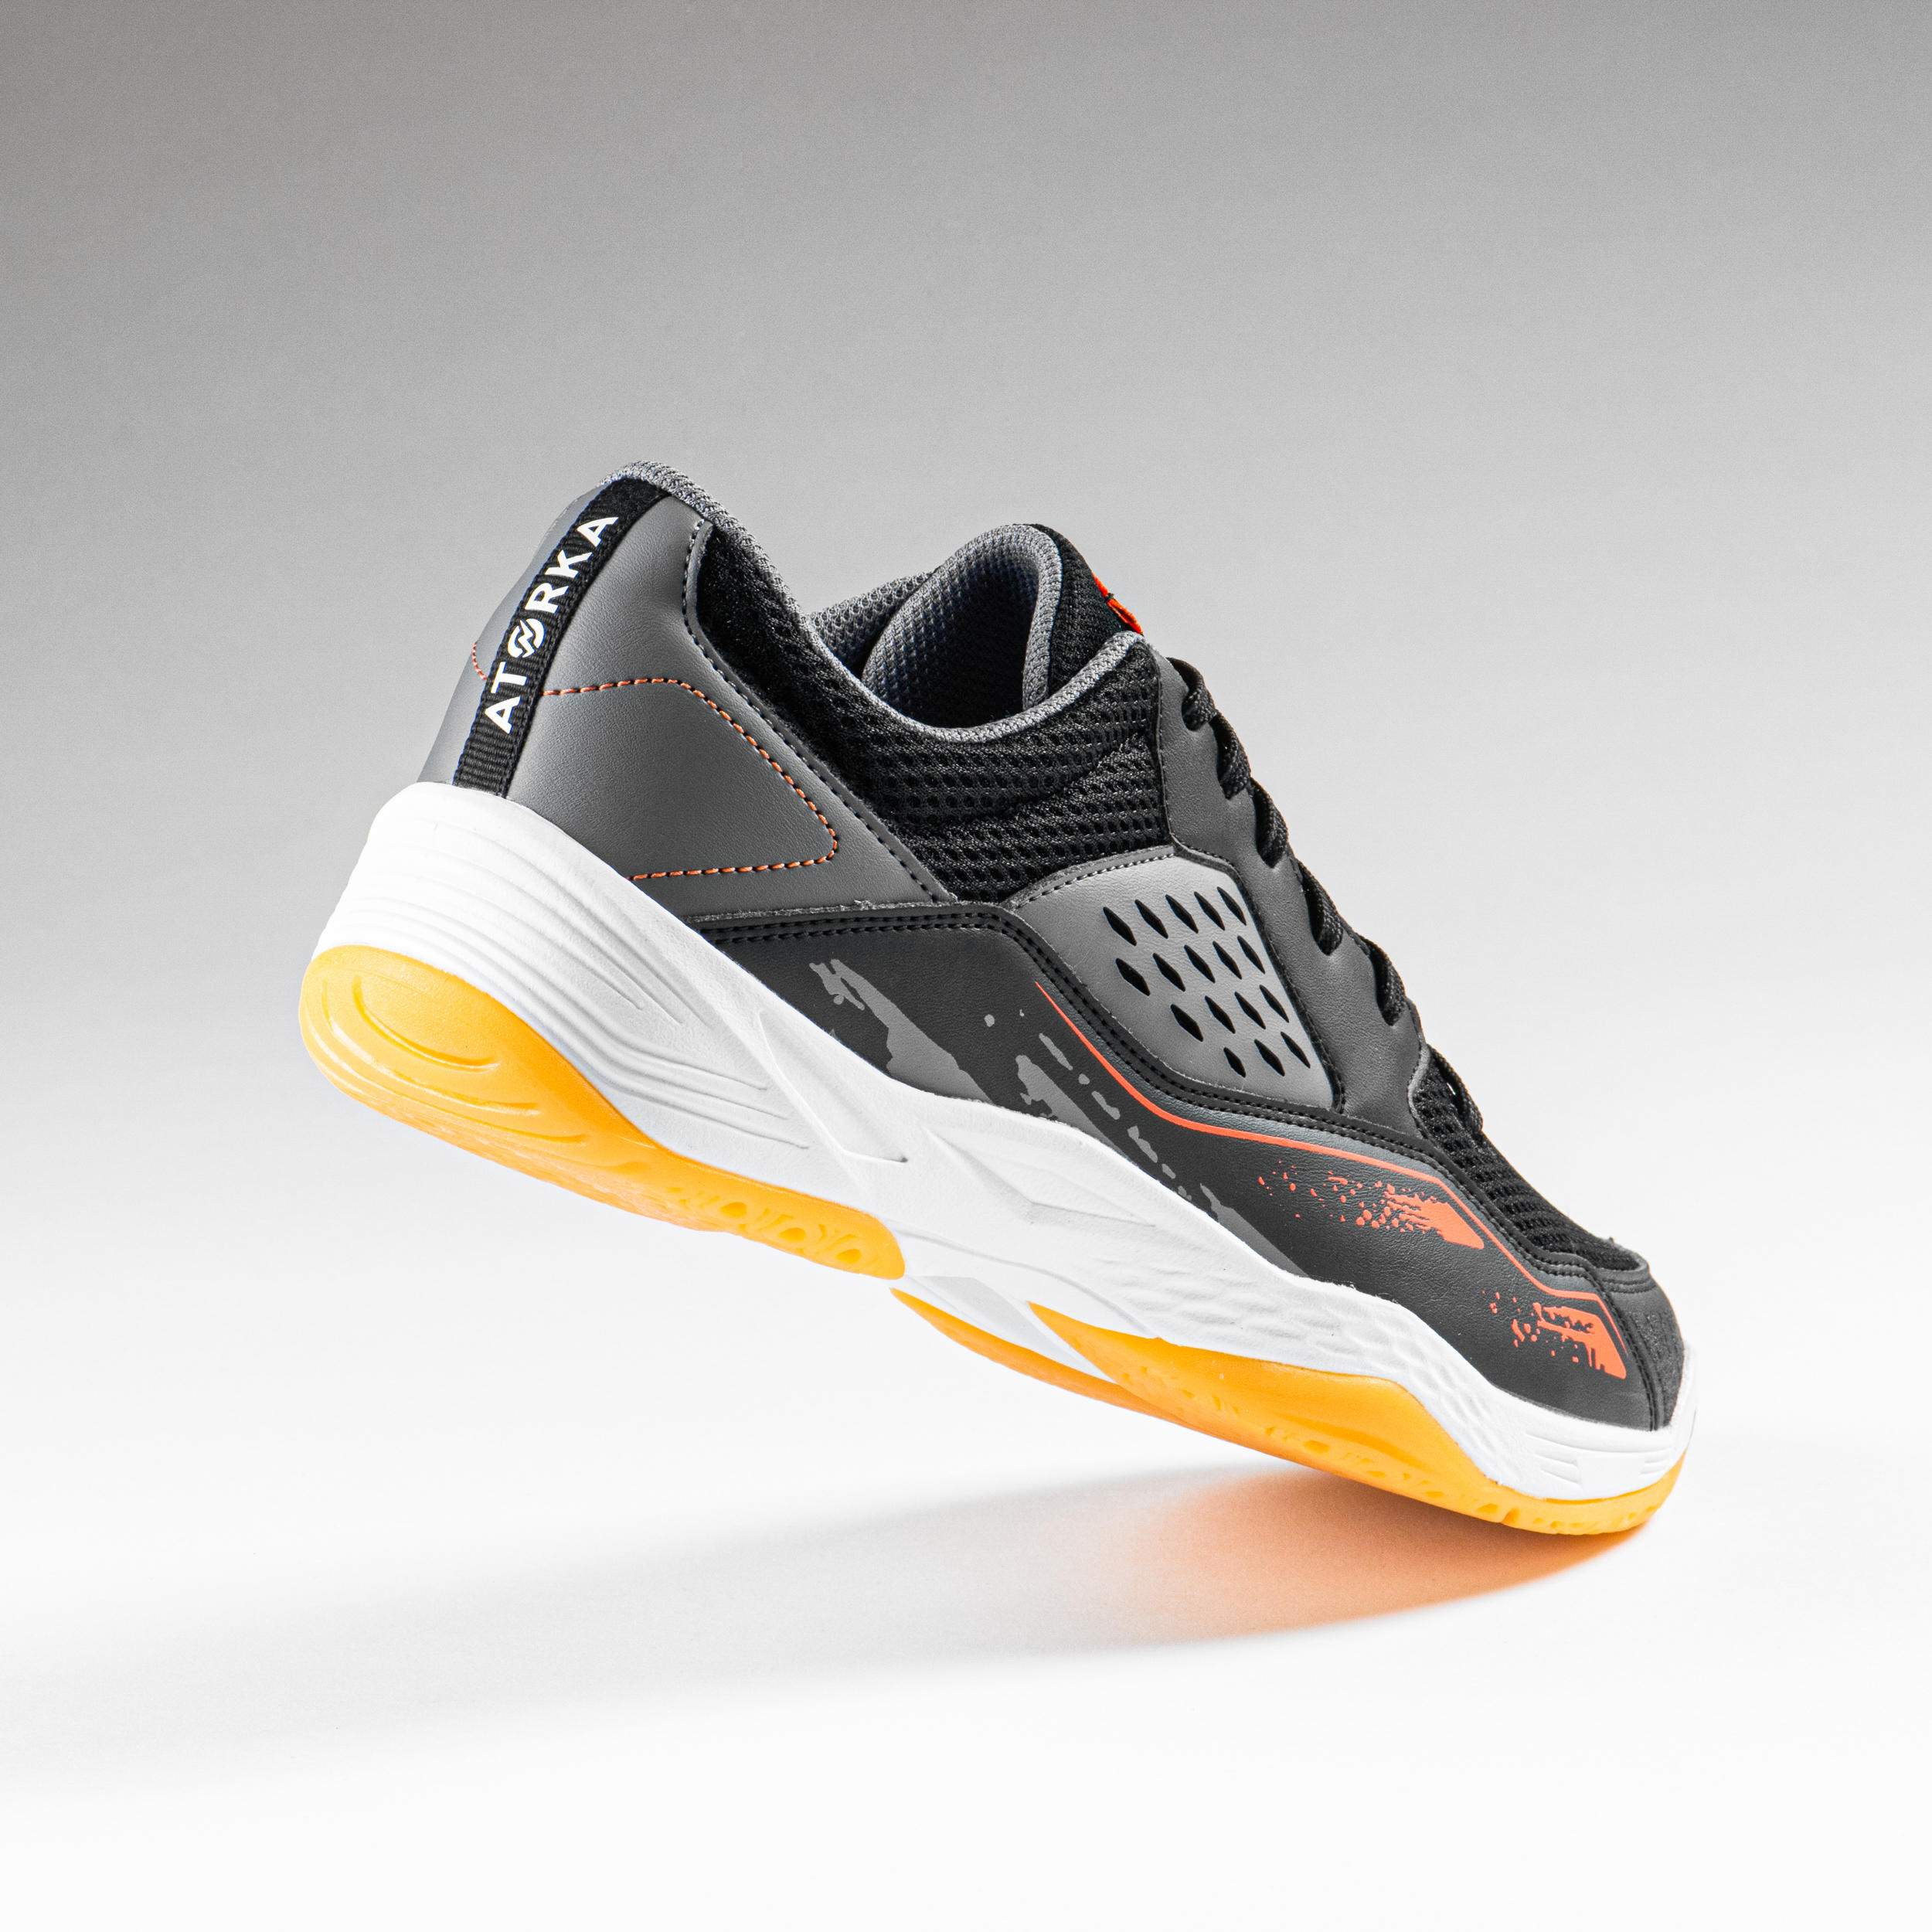 Men's Handball Shoes H100 - Grey/Black/Orange 4/8